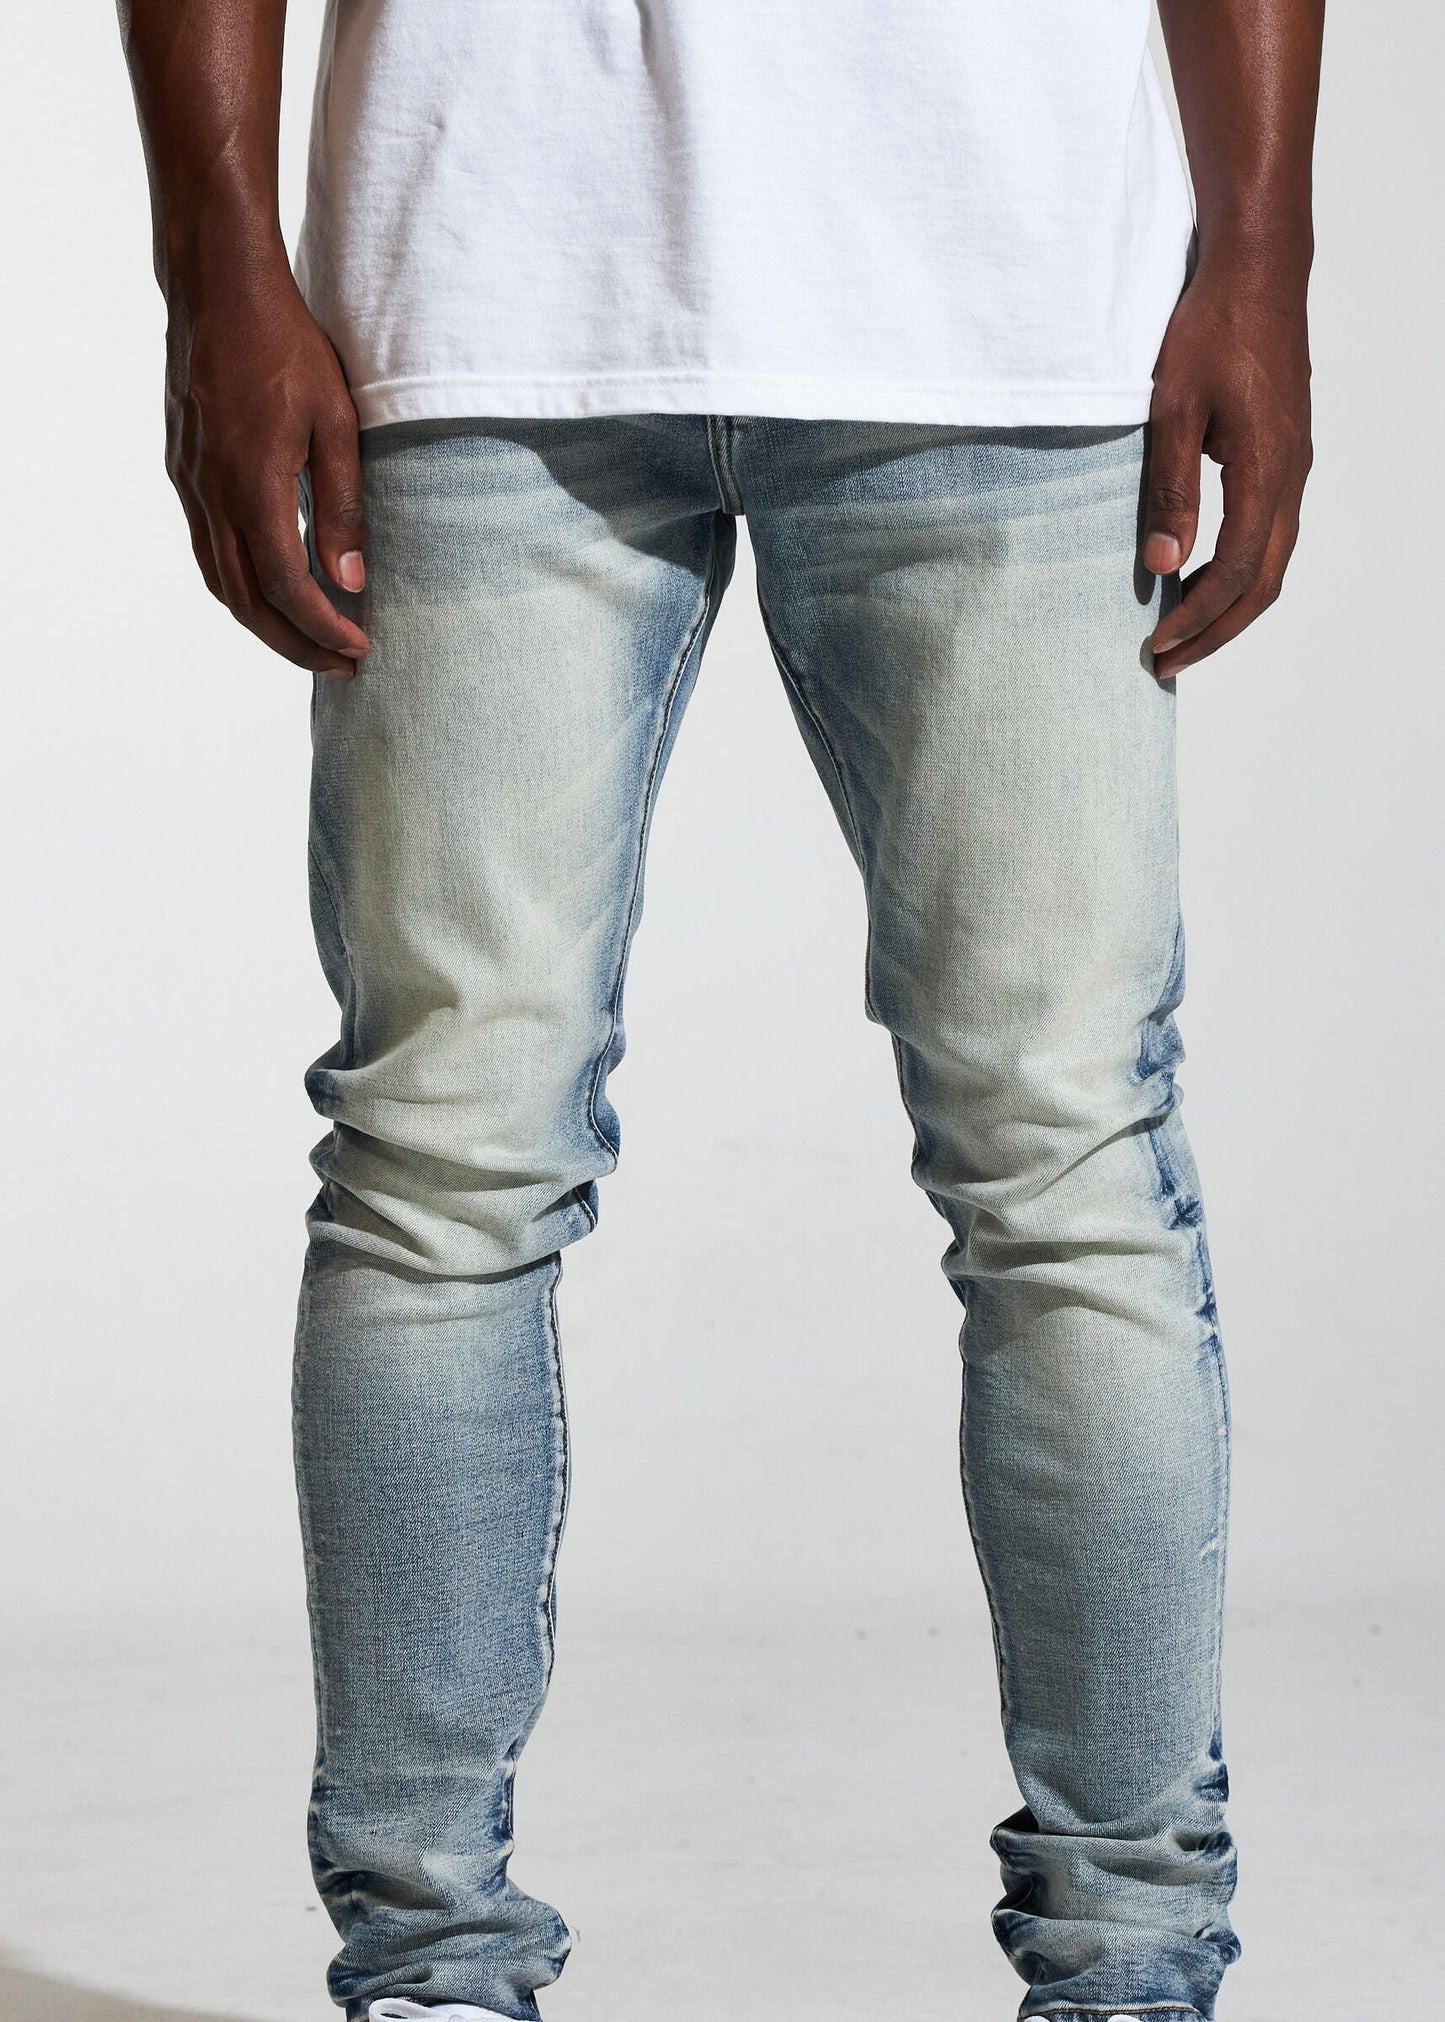 Crysp Denim Sky Light Stone Wash Skinny Denim Jeans (CRYSPR241-015)